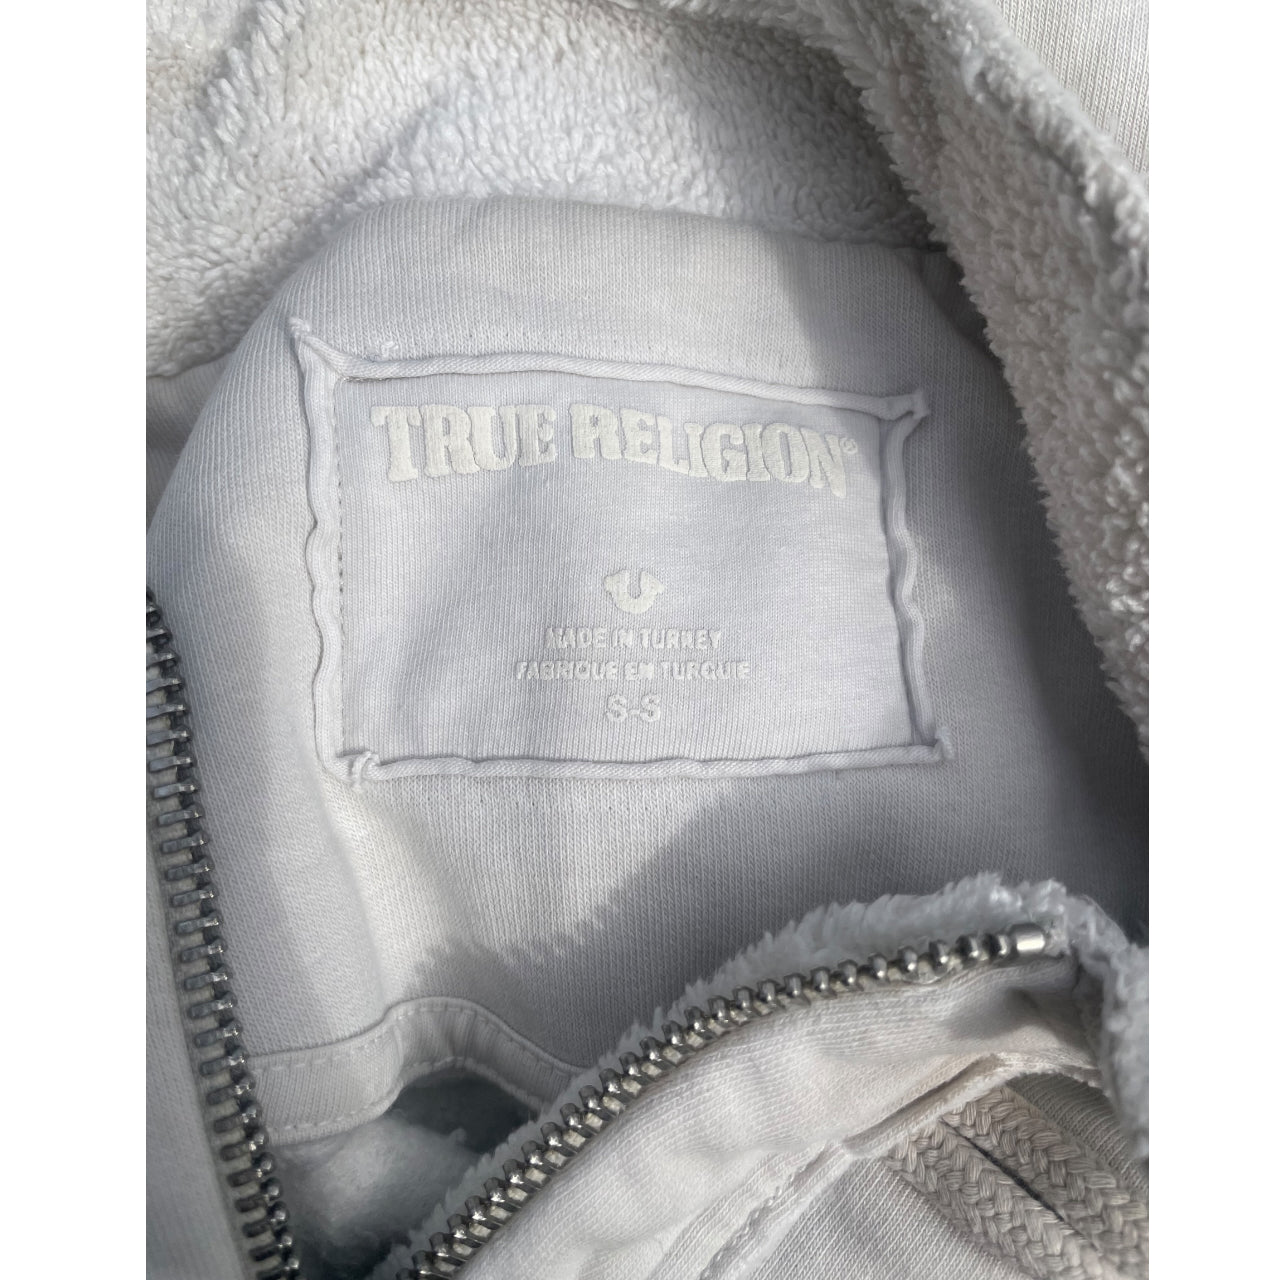 Vintage True Religion Jacket Button Detail 90s White S Size A_69